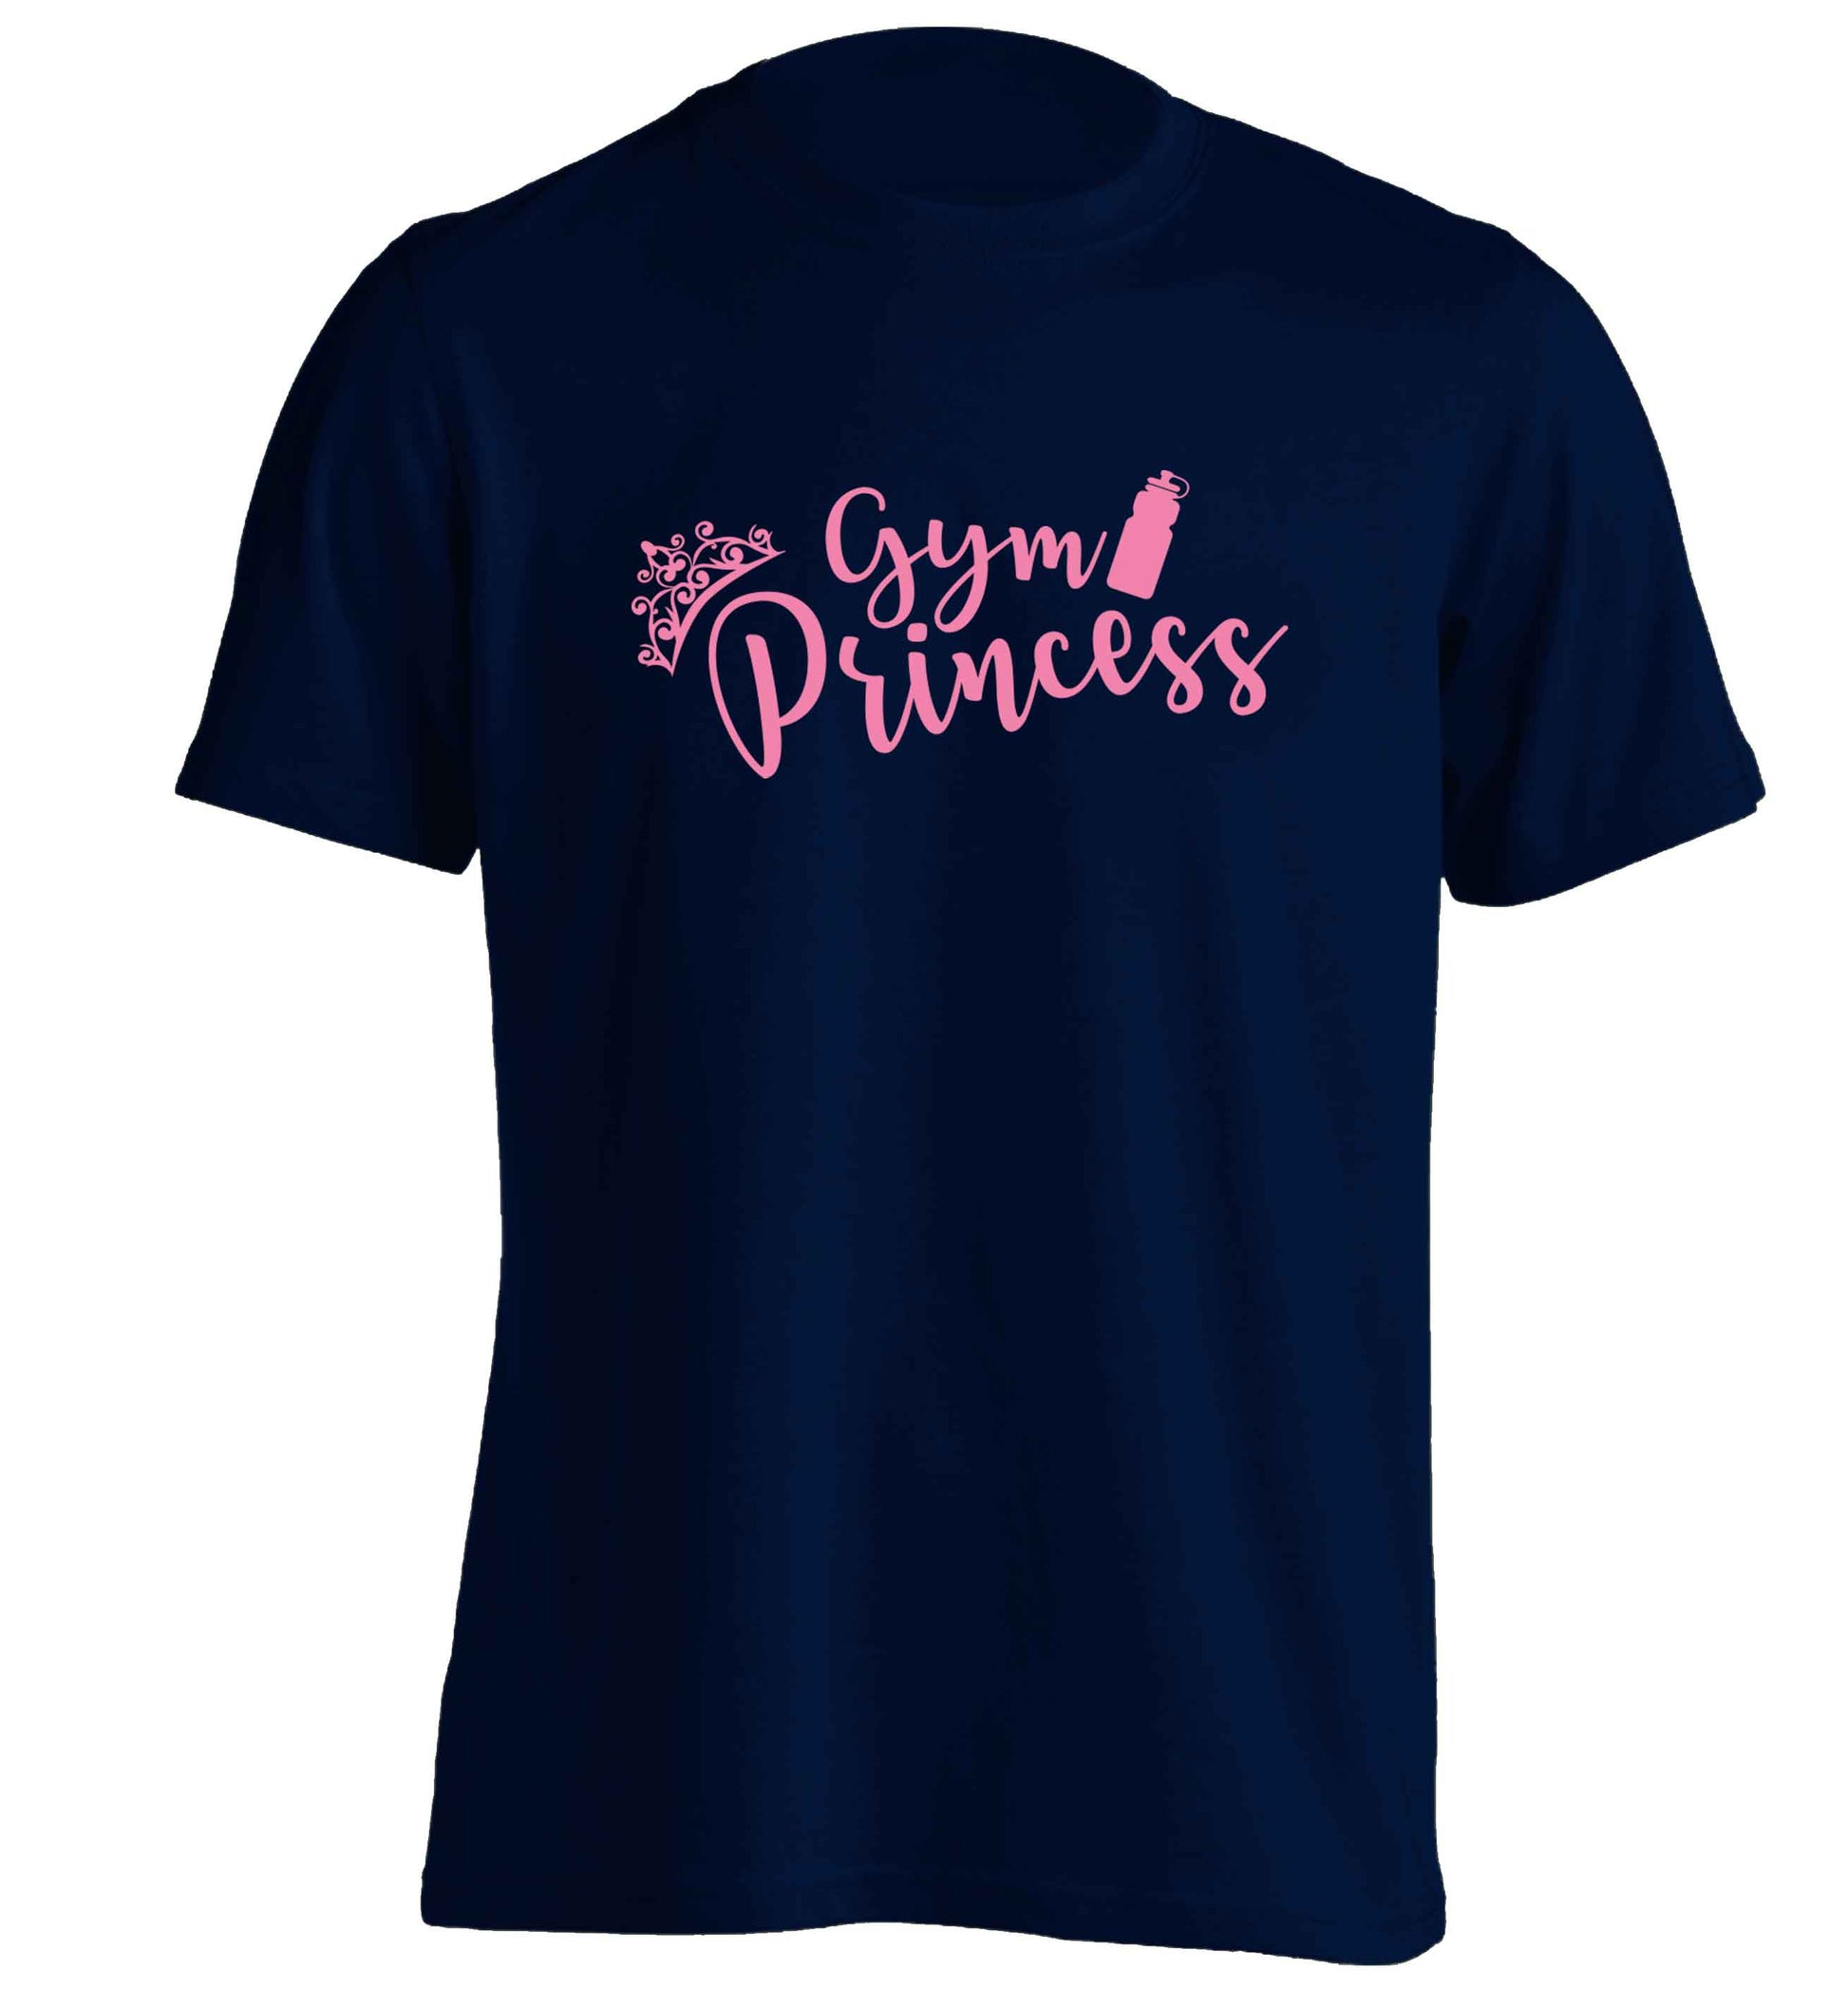 Gym princess adults unisex navy Tshirt 2XL